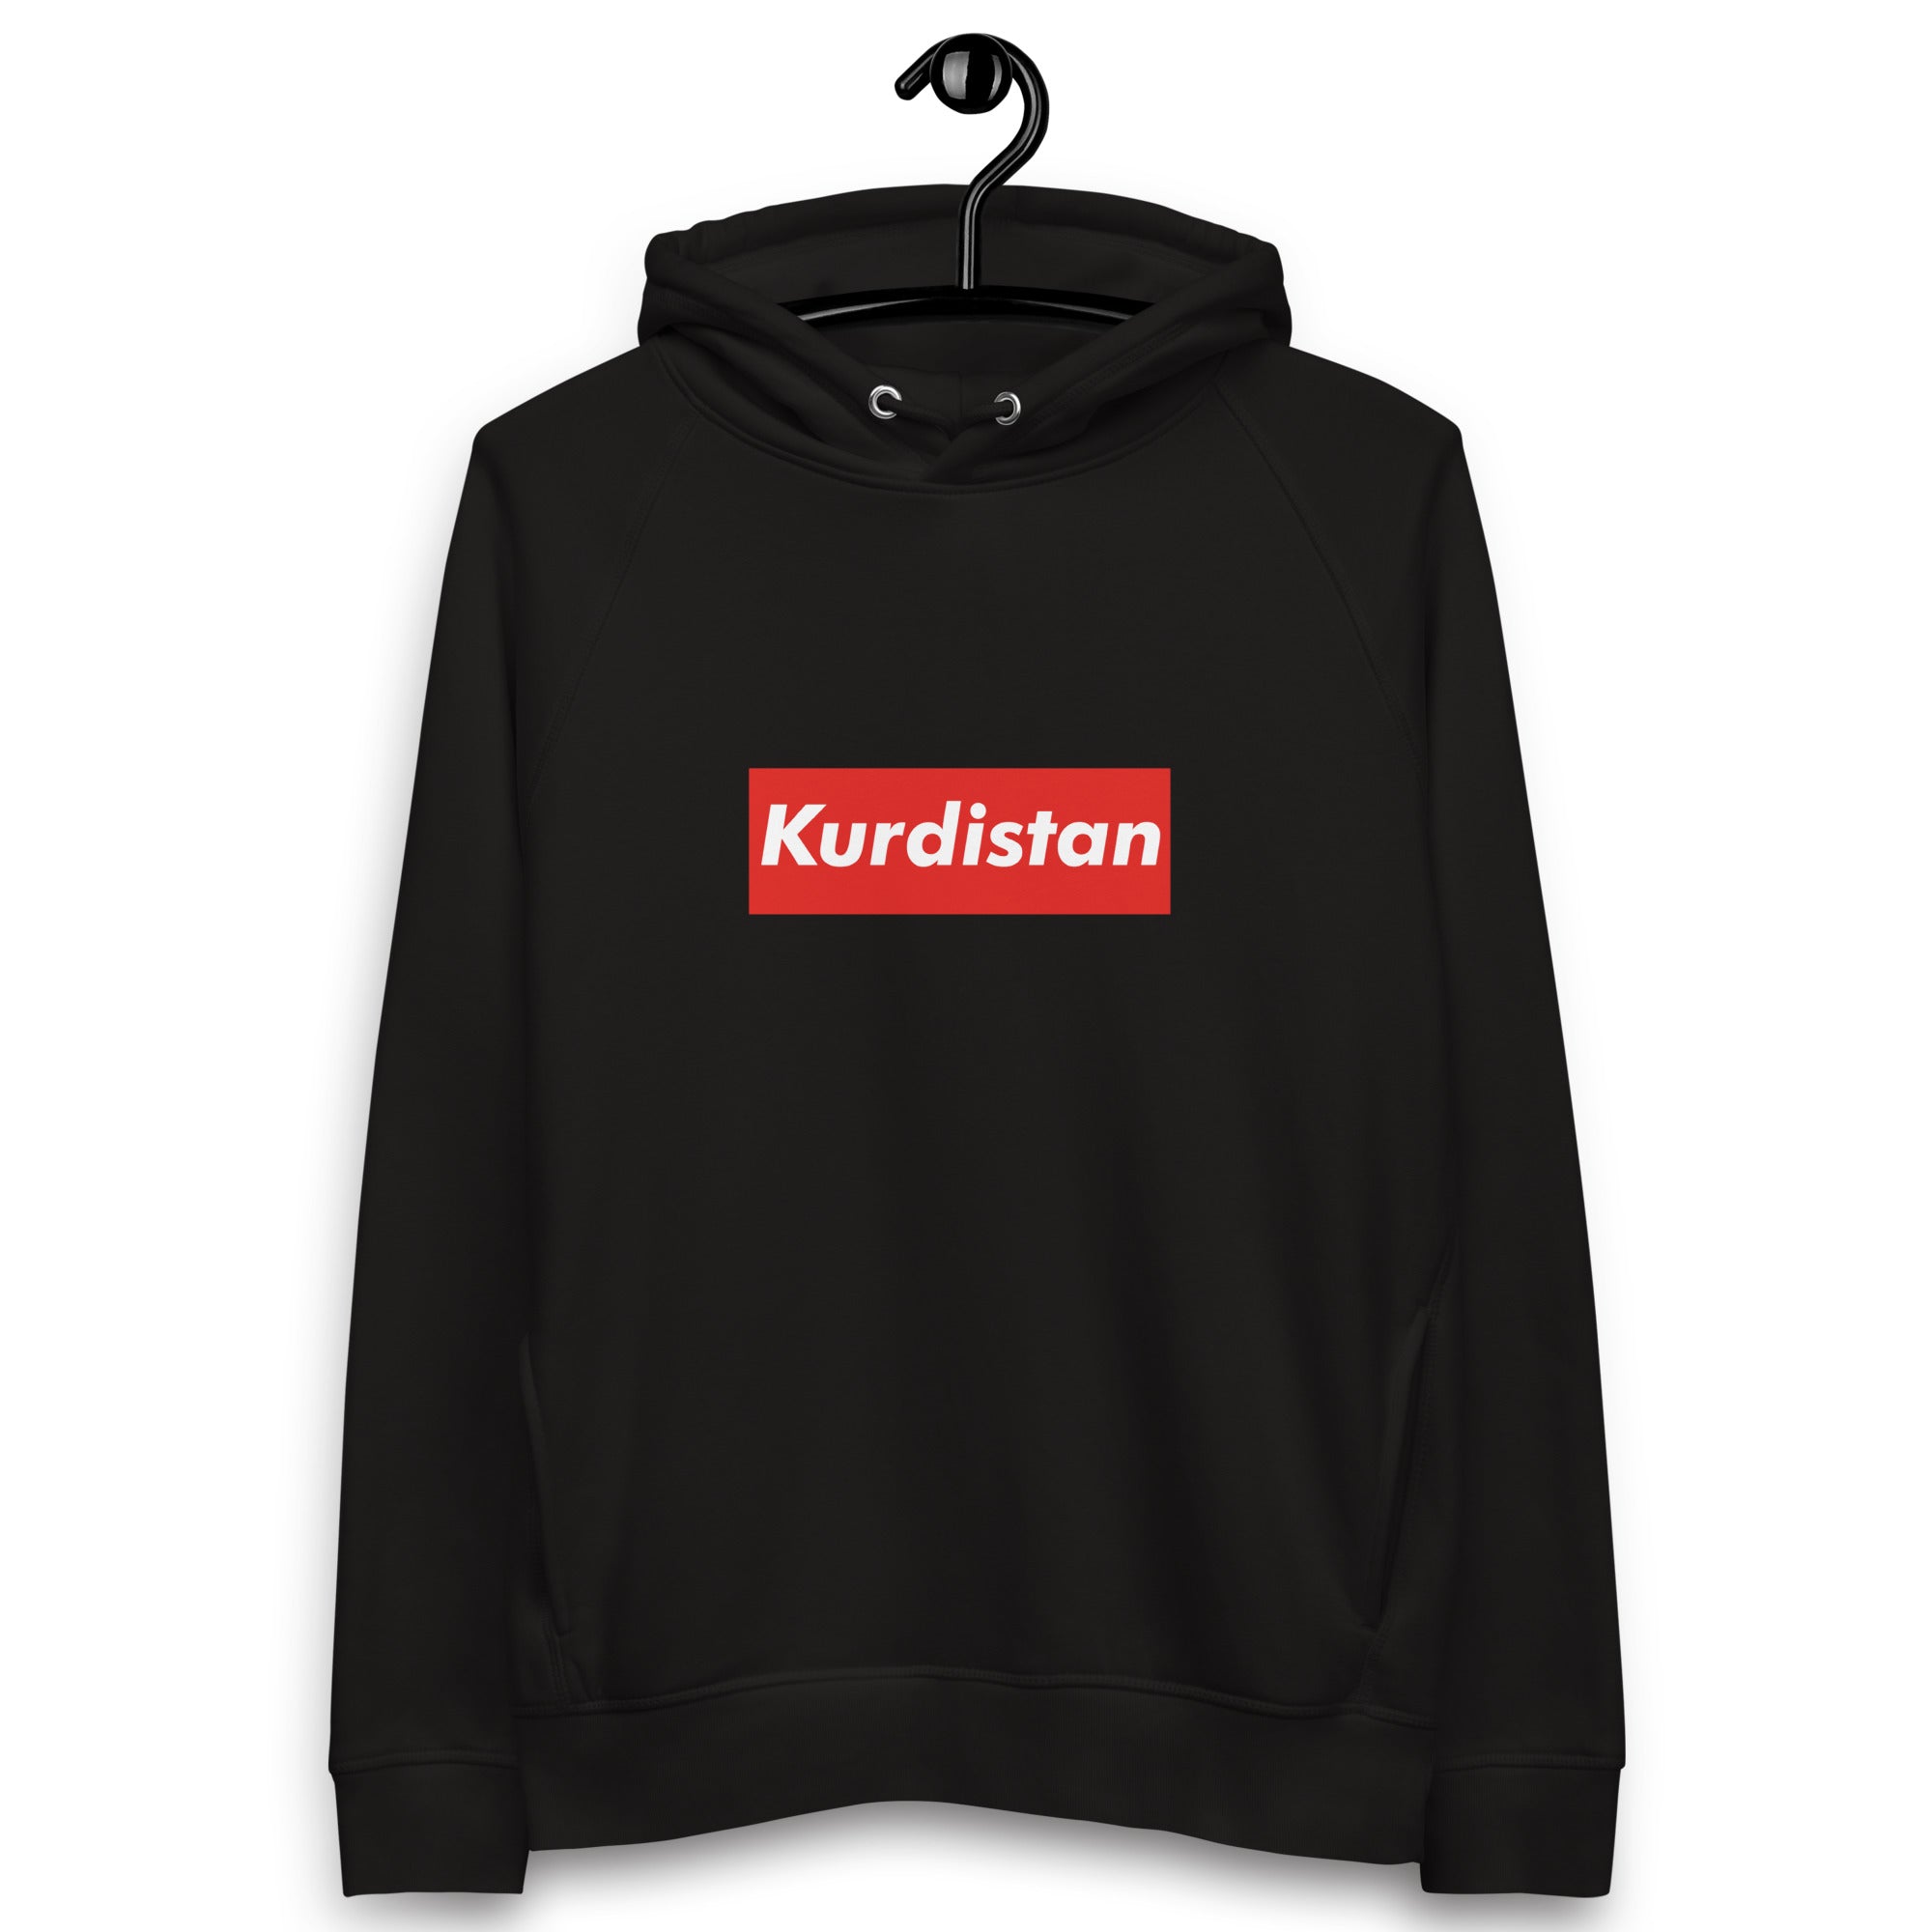 Kurdistan (supreme style) - hoodie